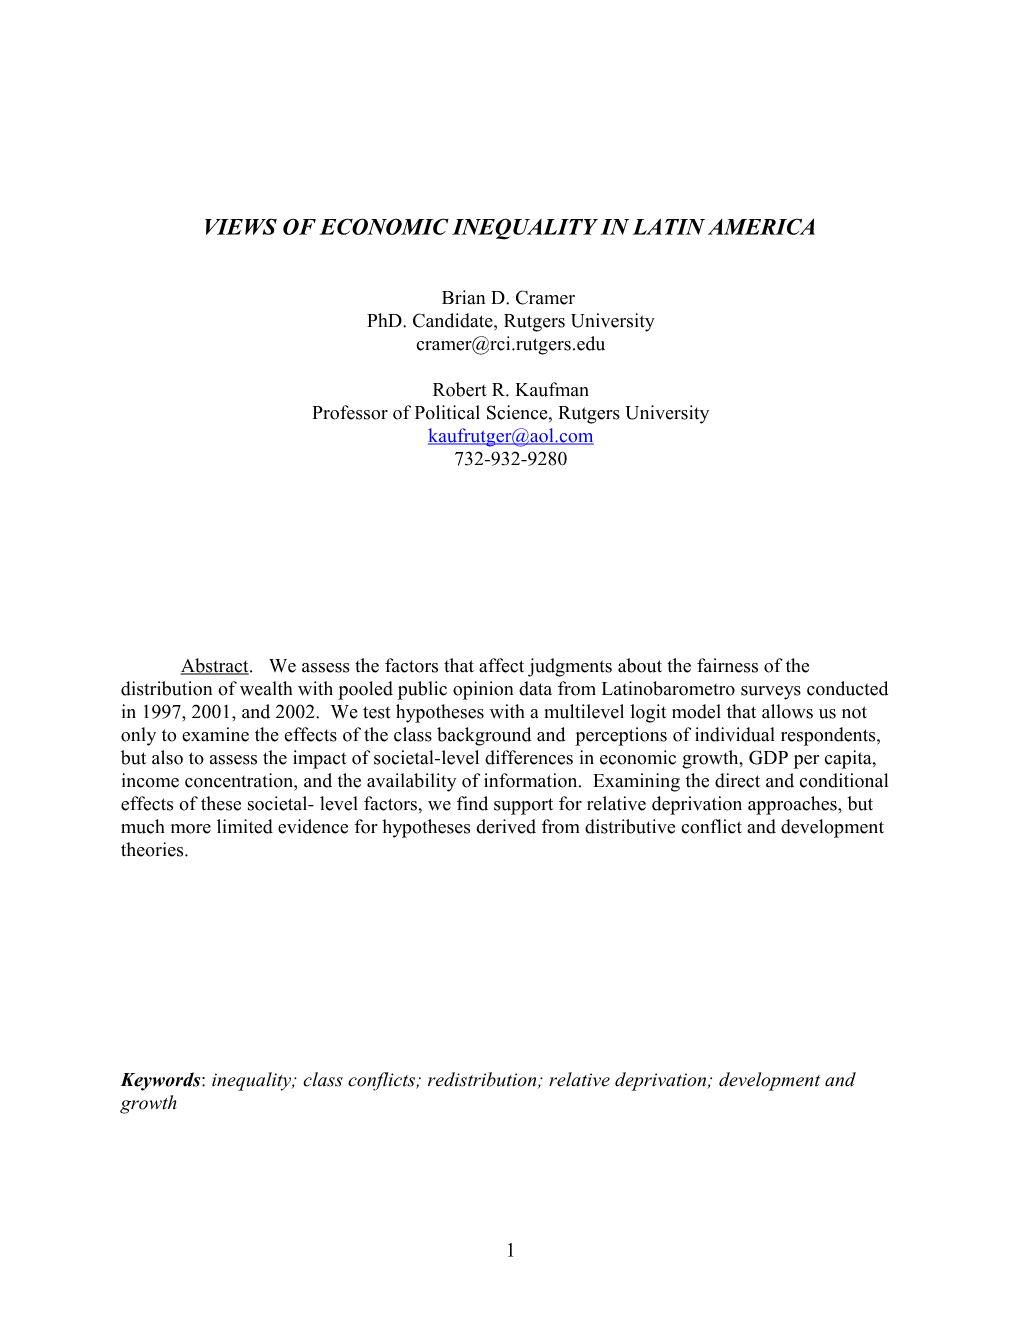 Determinants of Normative Responses to Economic Inequality in Latin America